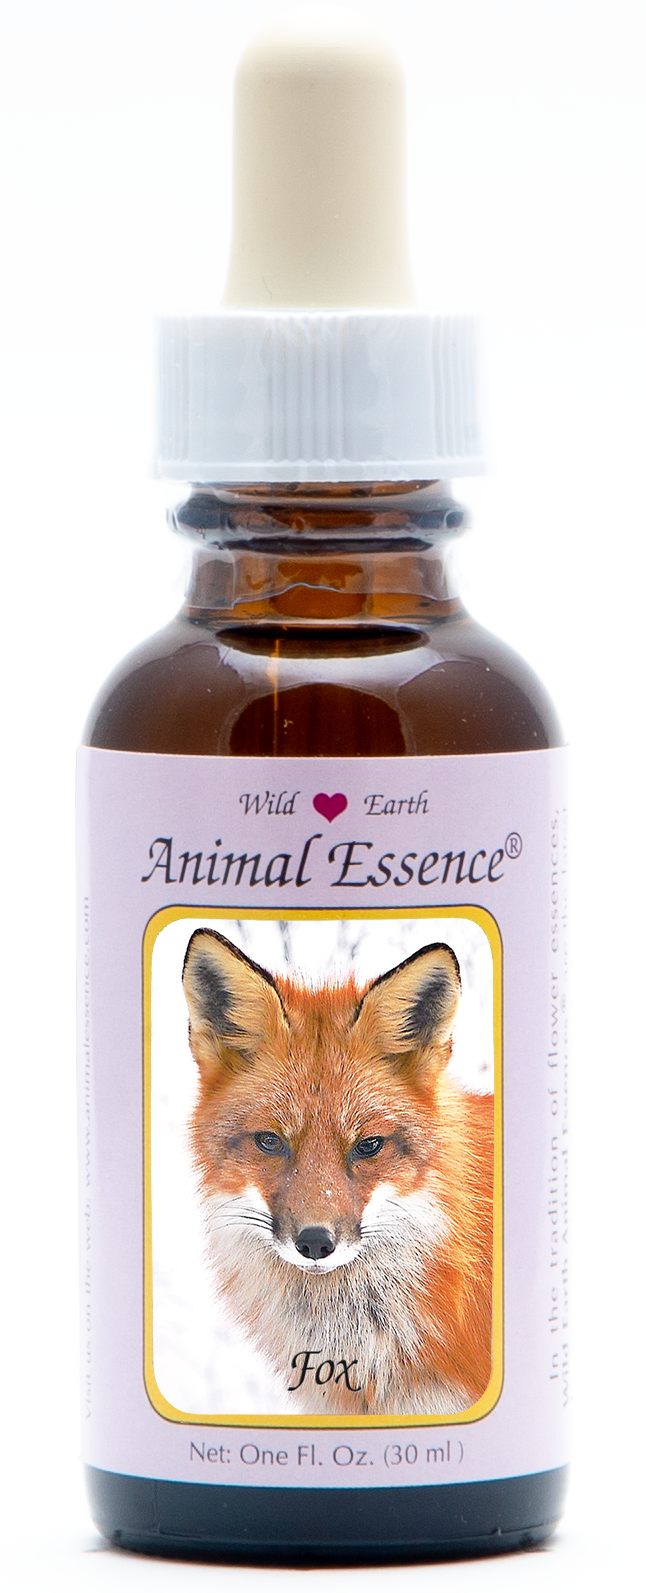 Fox animal essence 30ml